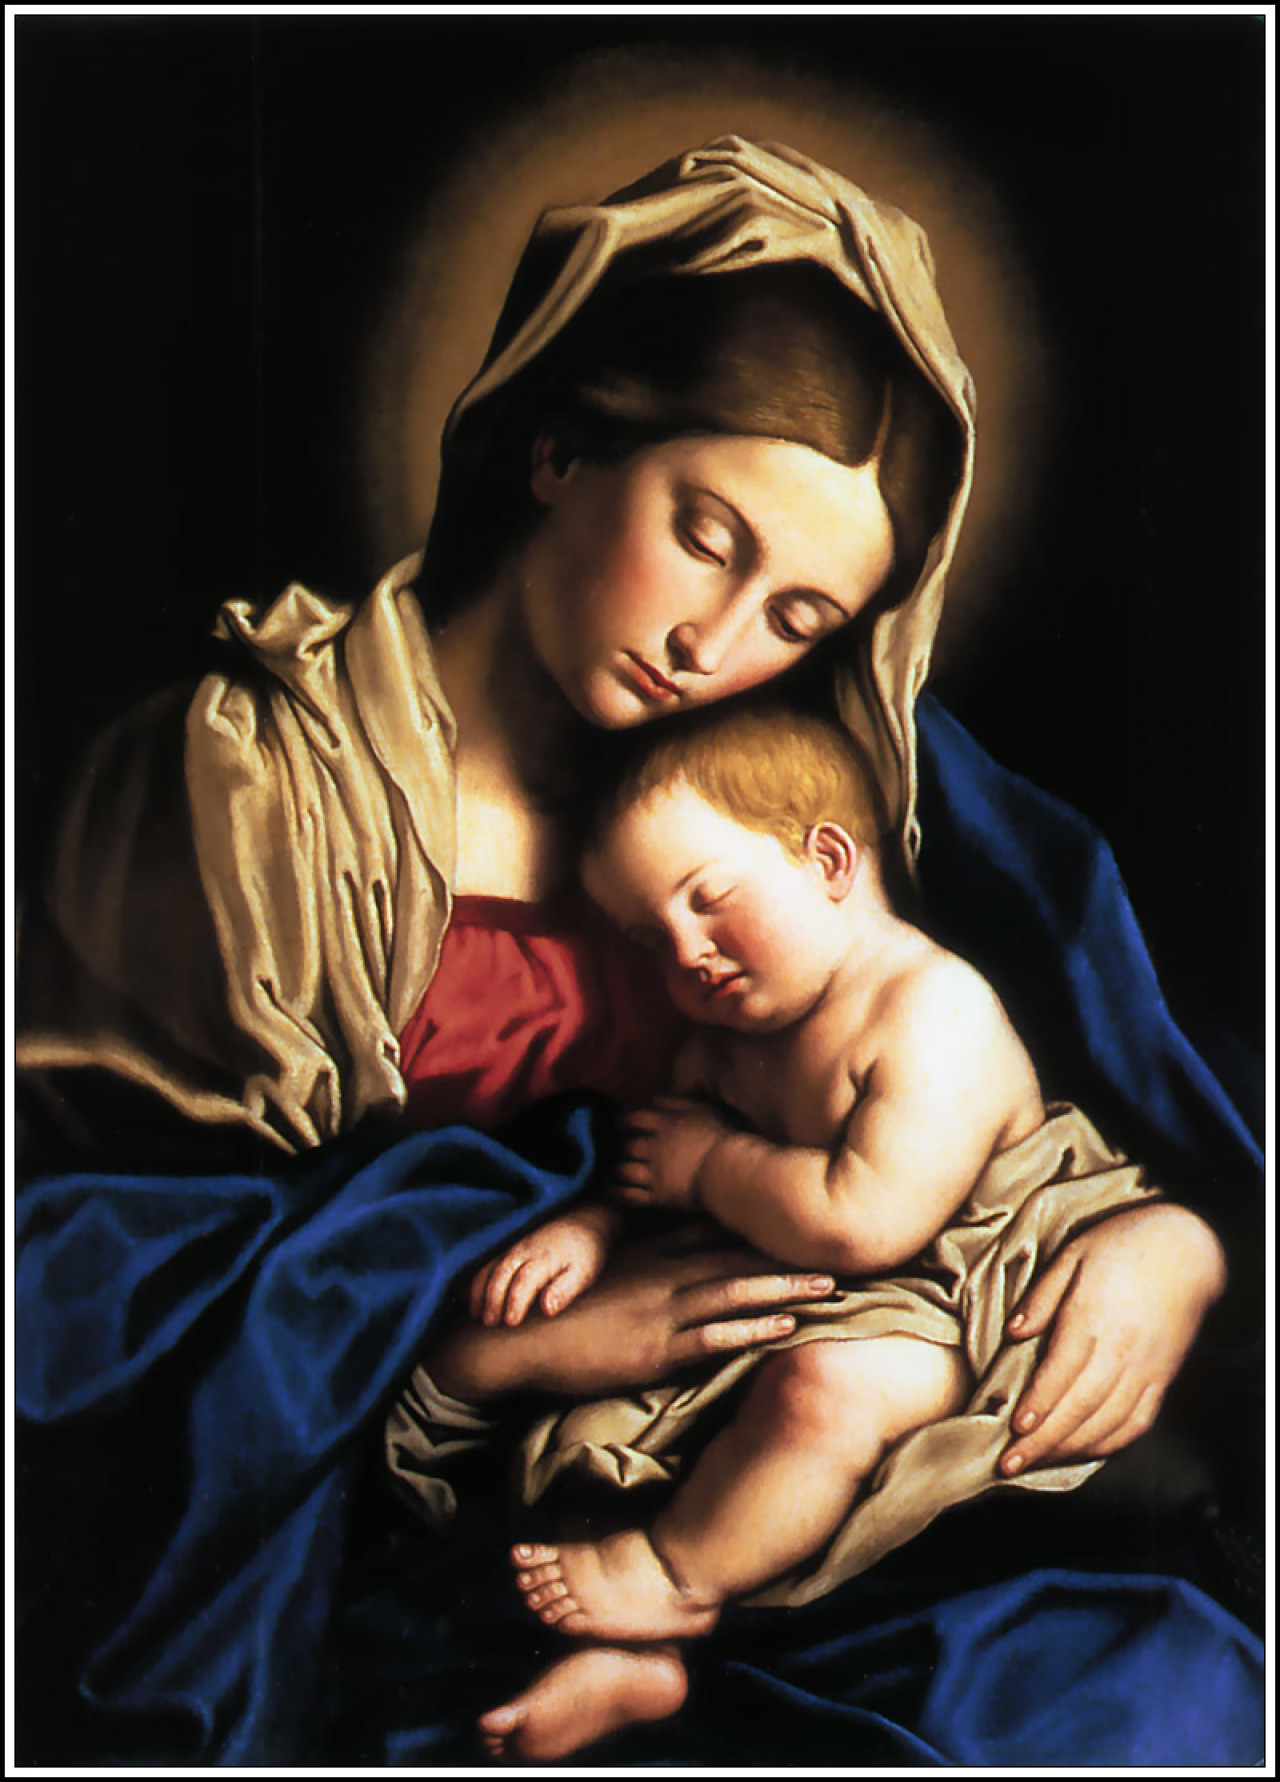 Solenidade da Santa Mãe de Deus, Maria